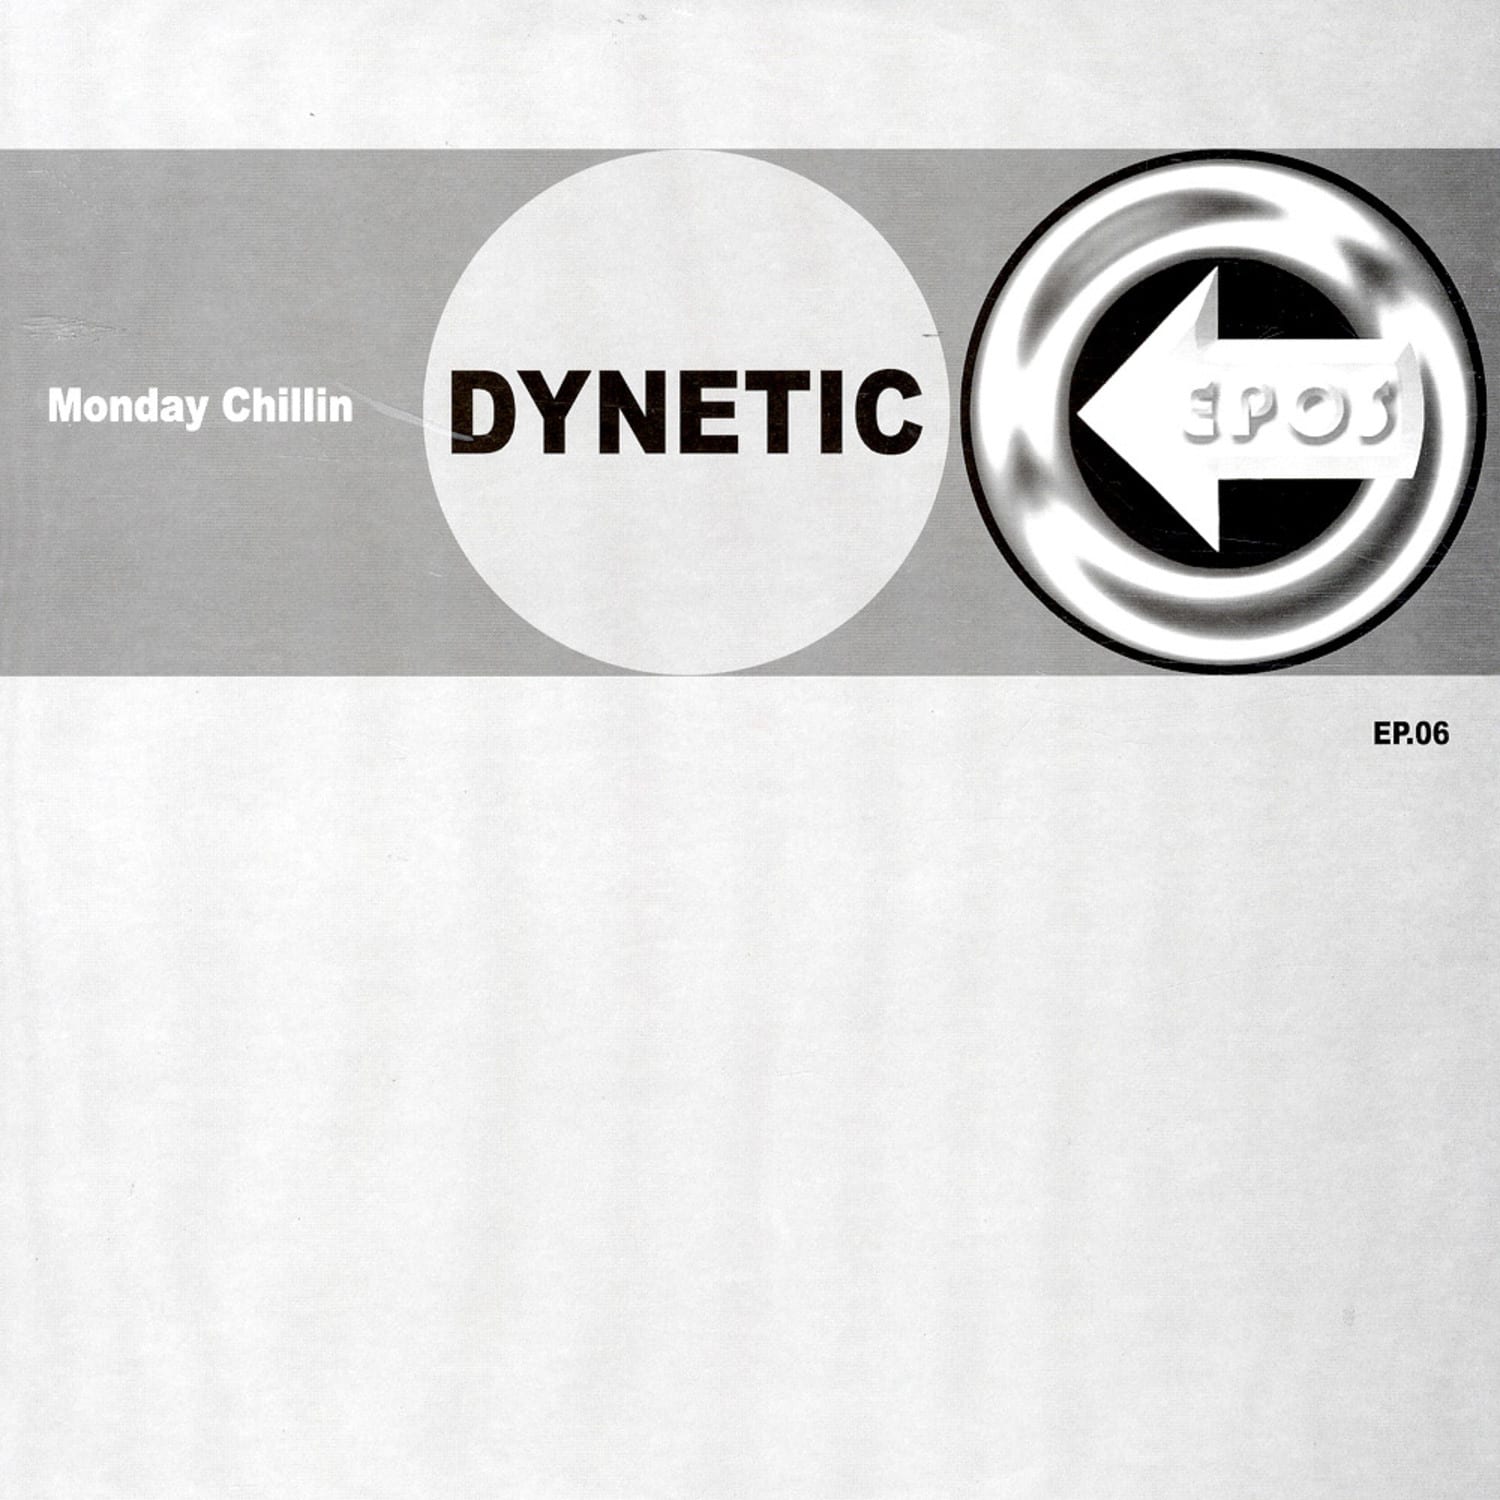 Dynetic - MONDAY CHILLIN